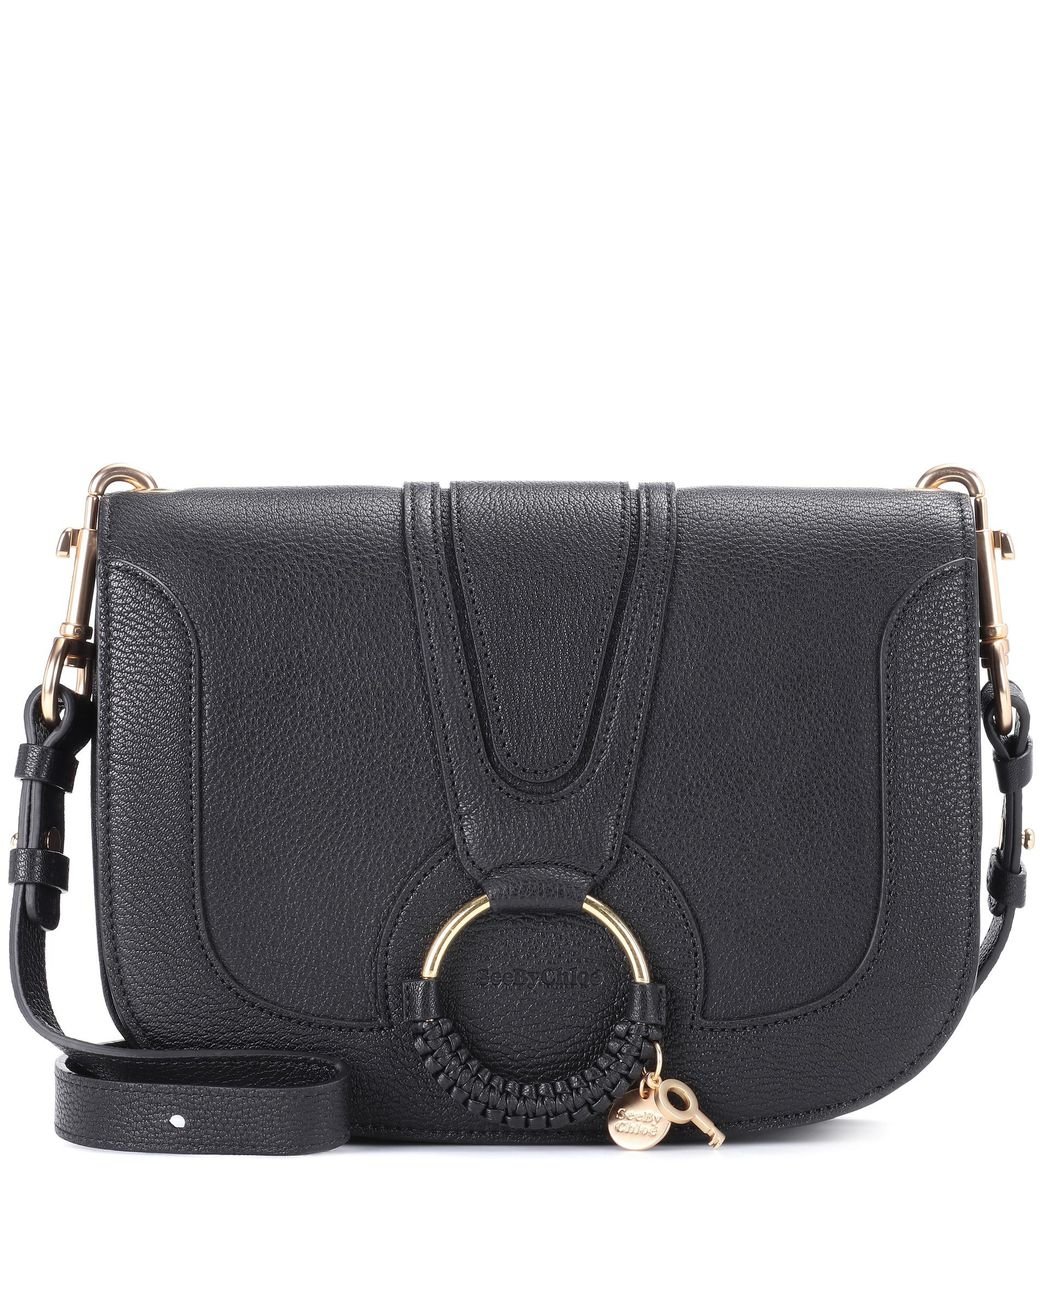 See By Chloé Hana Medium Leather Shoulder Bag in Black - Lyst